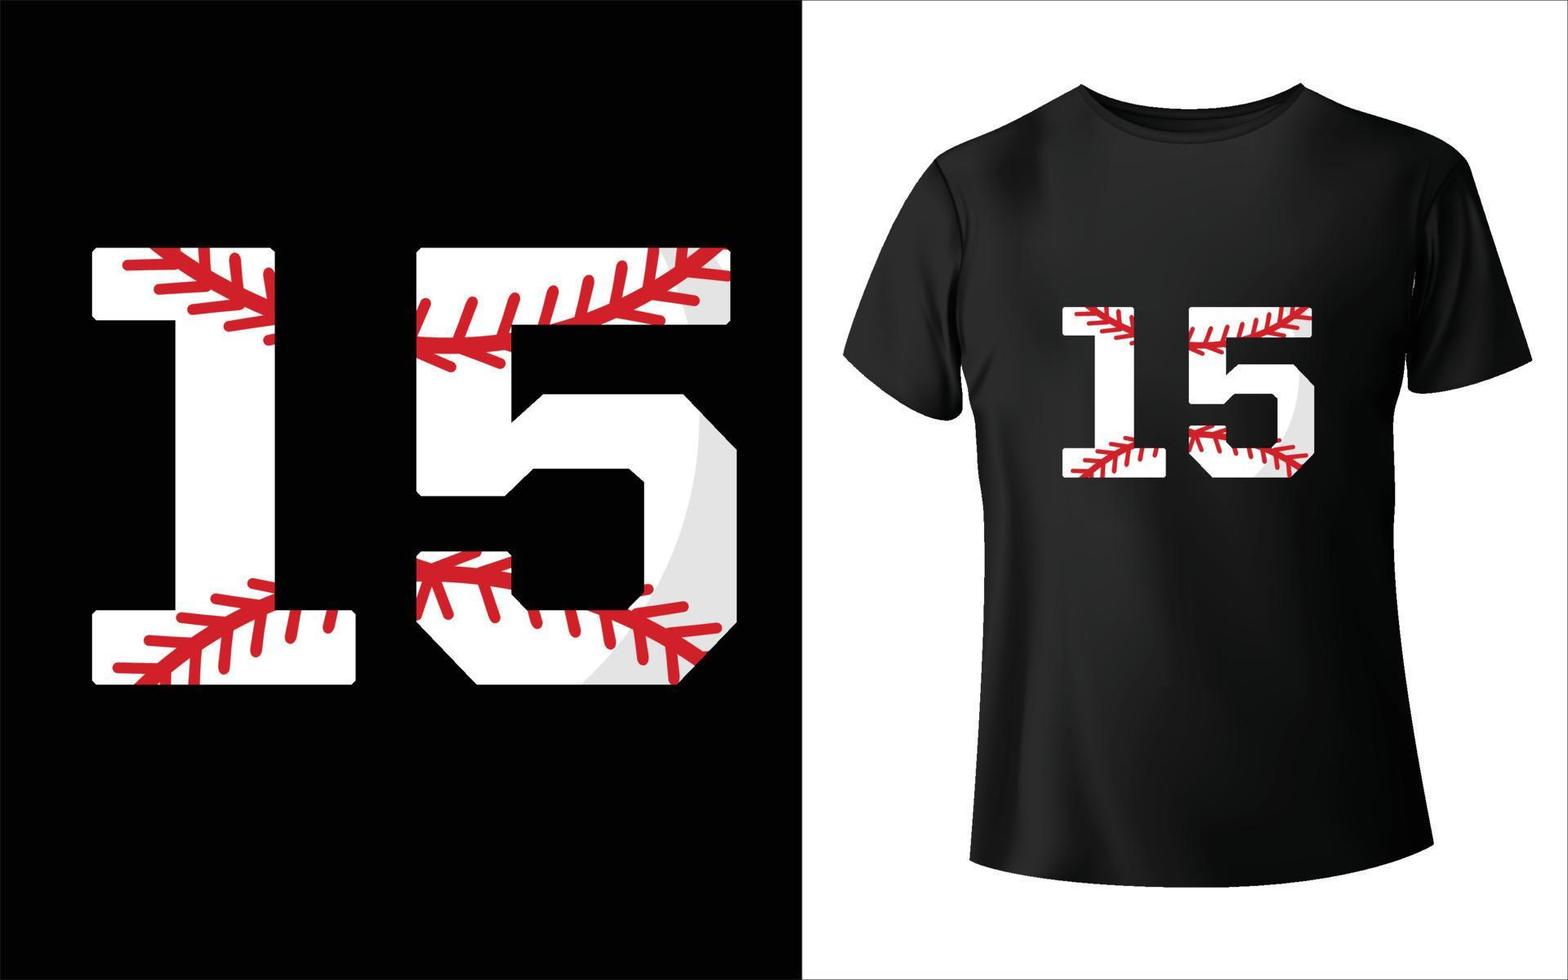 camiseta mãe de beisebol 1-15 vetor de design de camiseta mãe de beisebol, mãe de beisebol - design de beisebol